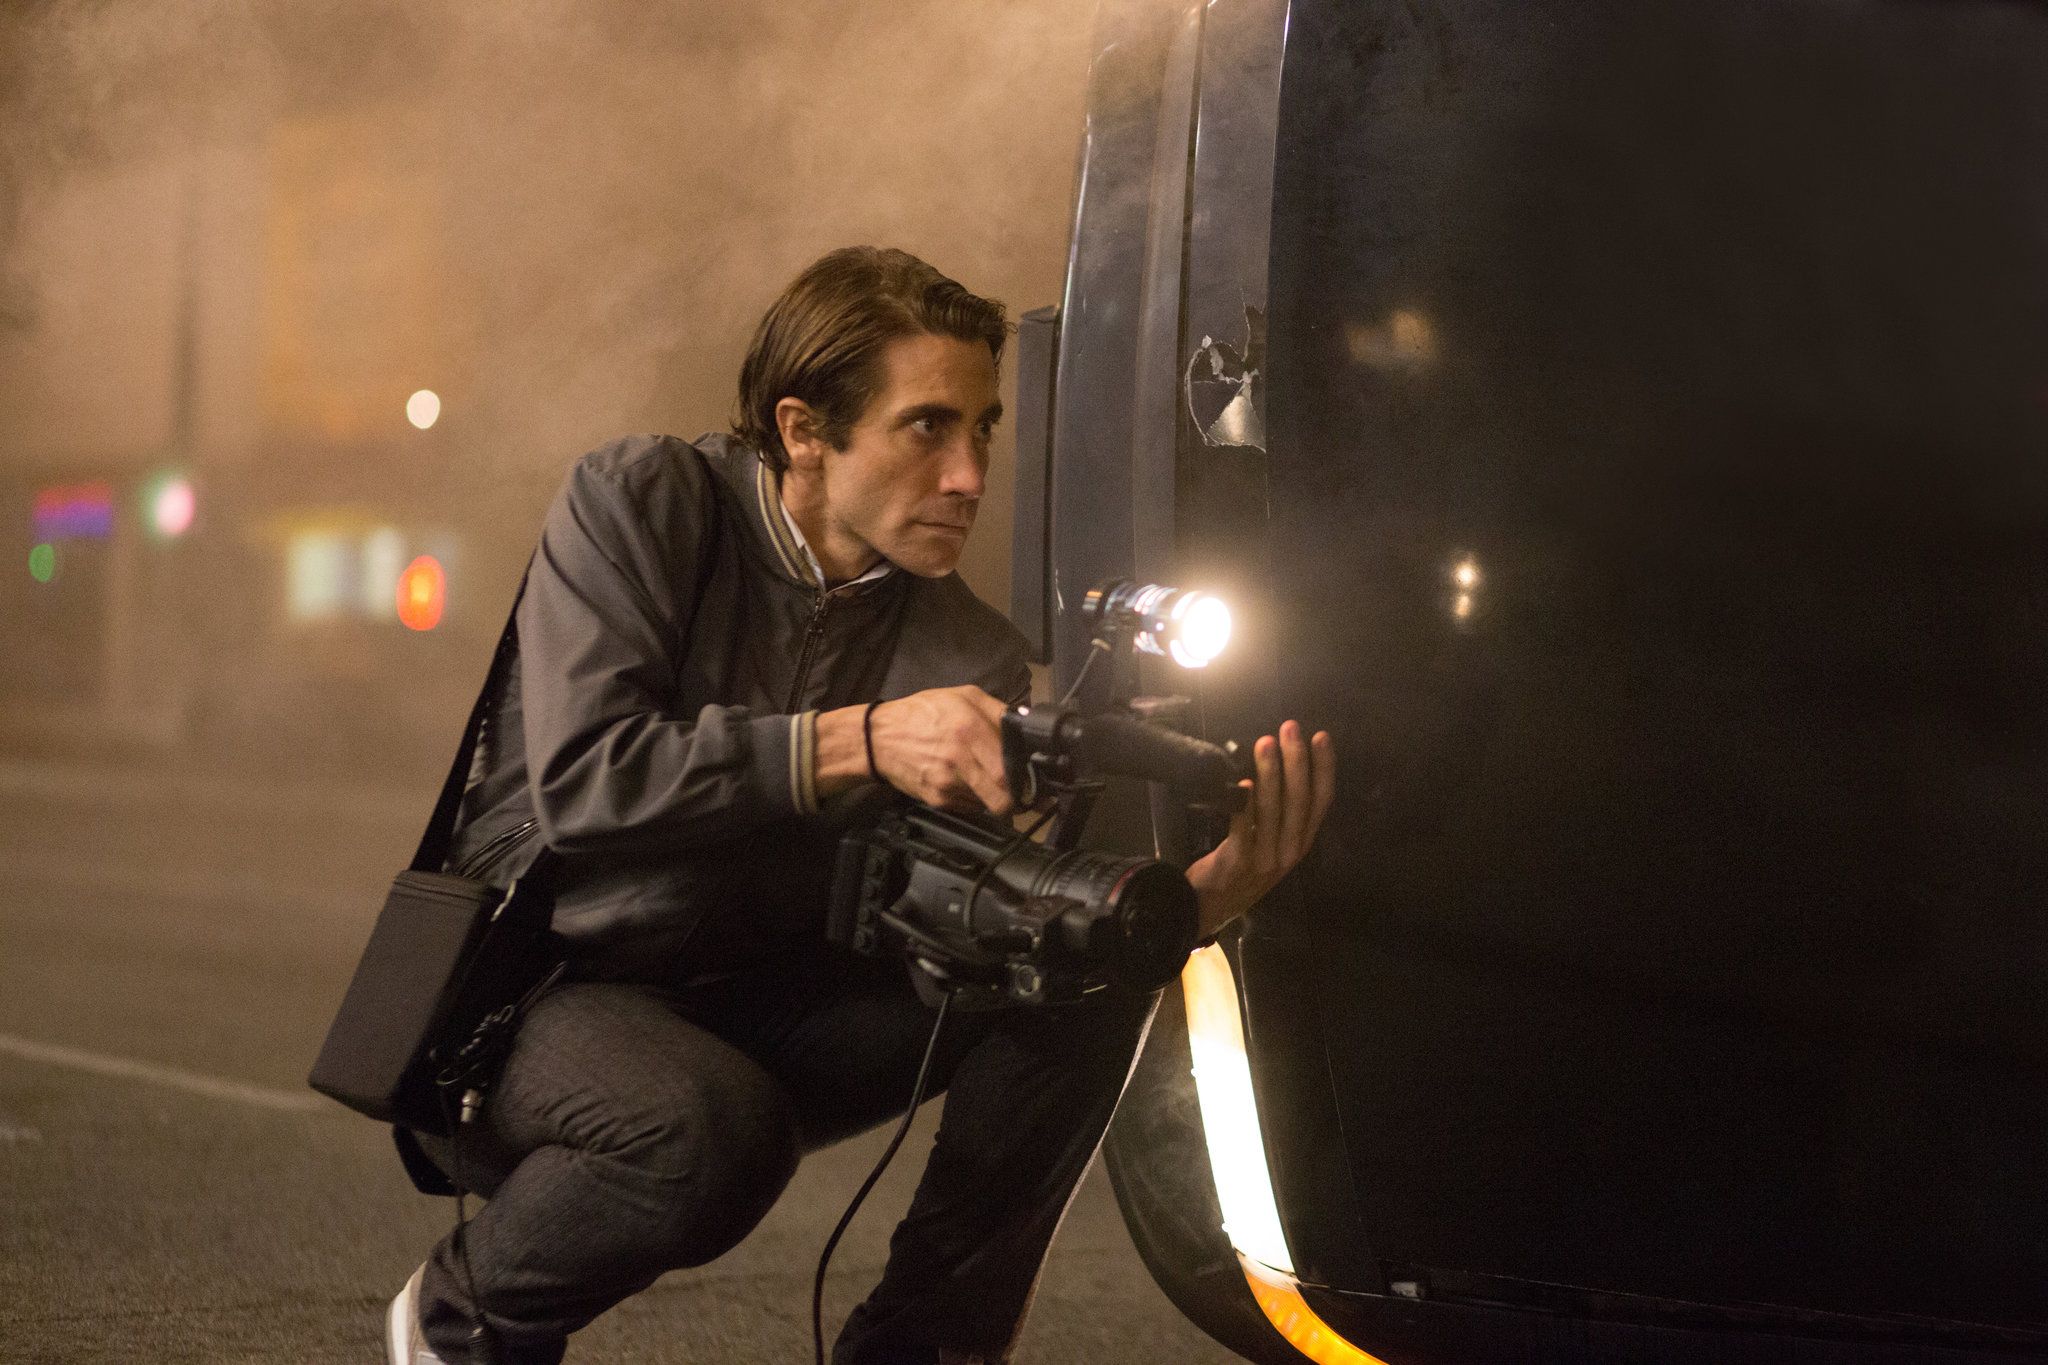 Nightcrawler' Stars Jake Gyllenhaal as an Obsessive